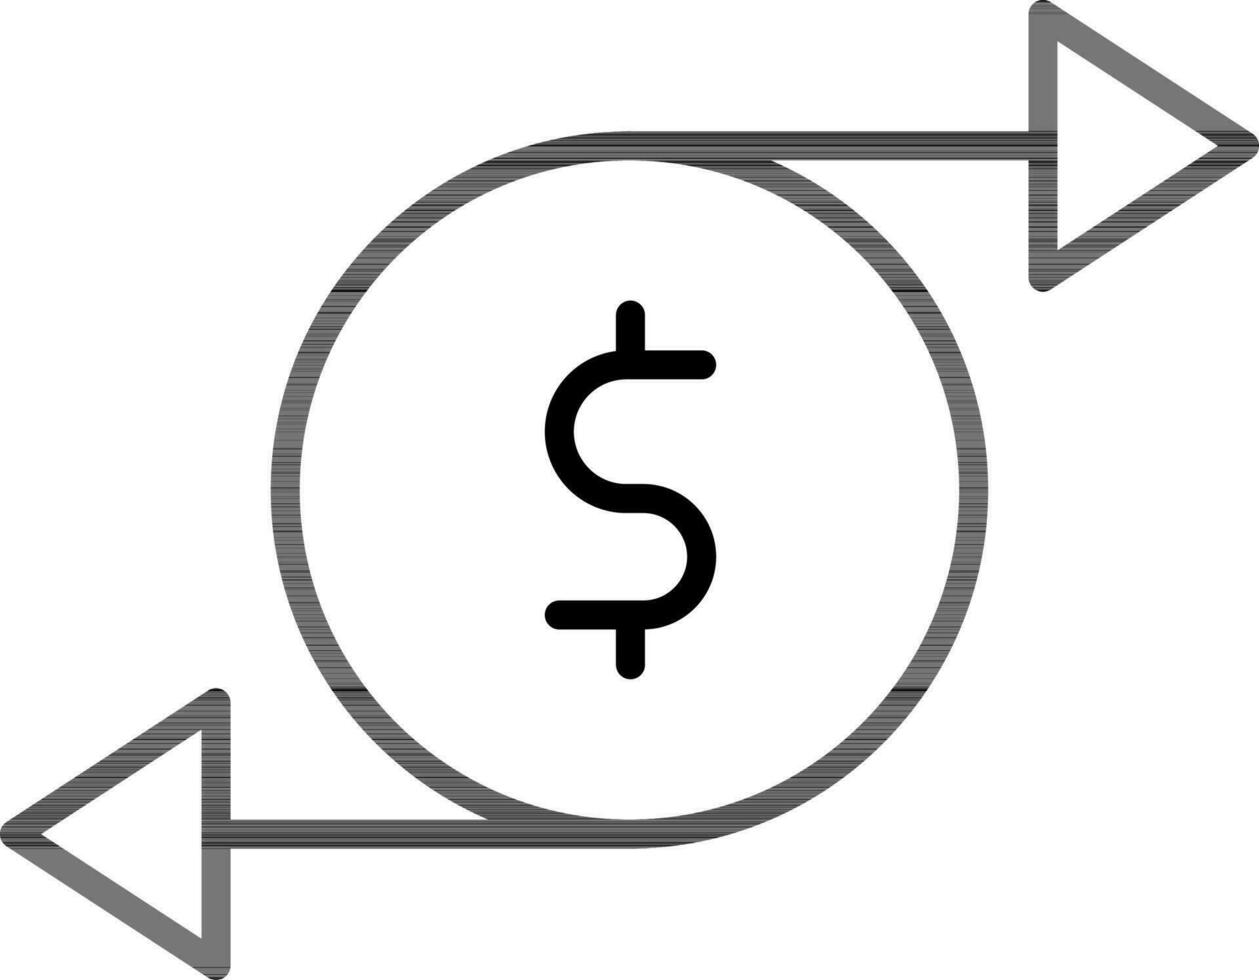 Transaction Dollar Coin icon in black line art. vector